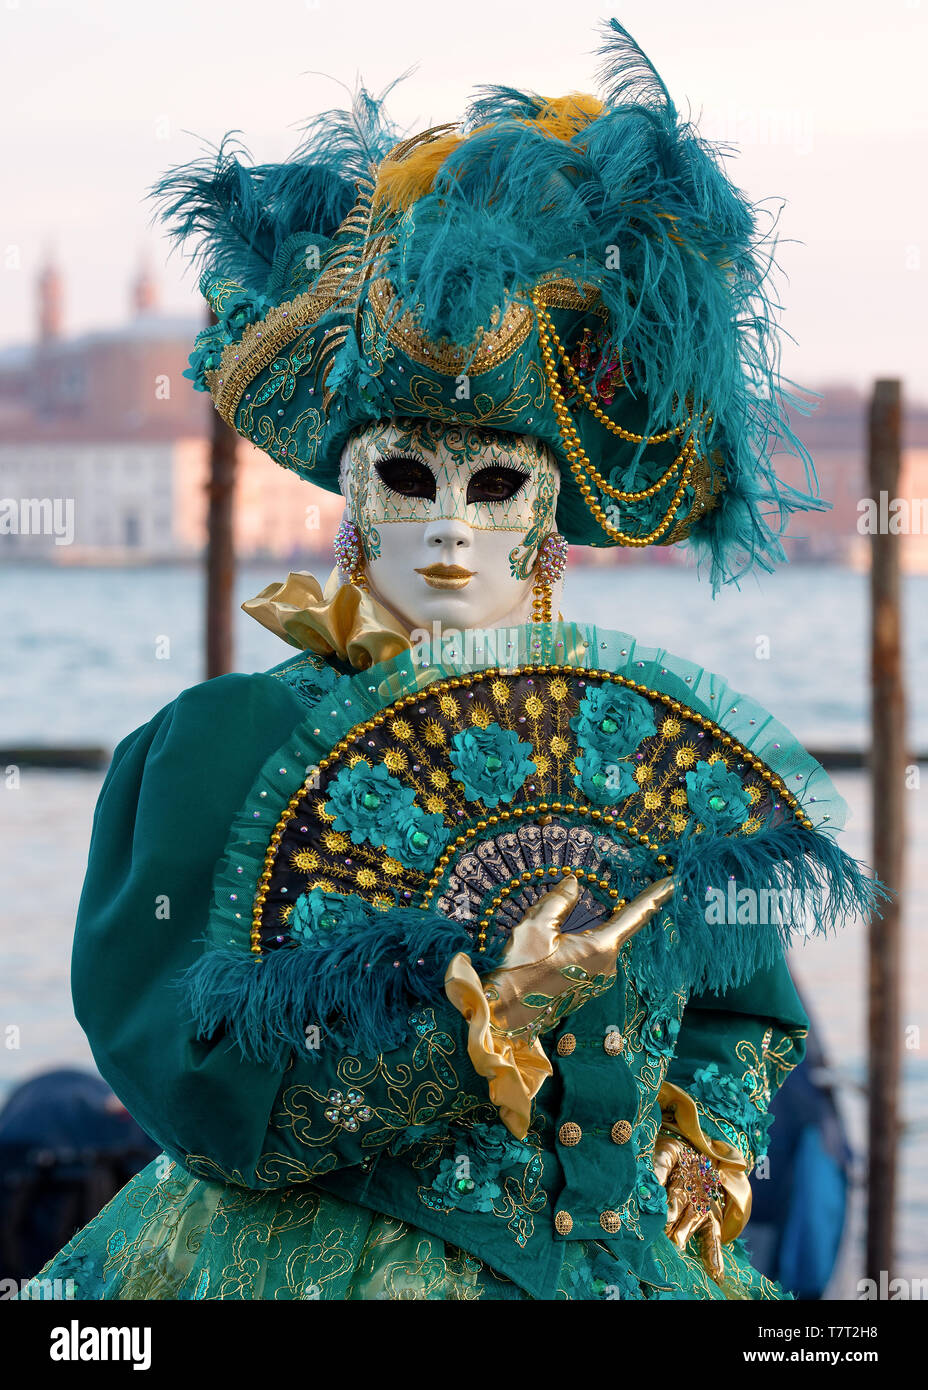 Reveller In Traditional Elaborate Mask And Costume At Venice Carnival (Carnevale  di Venezia). Venice, Veneto, Italy, Europe Stock Photo - Alamy